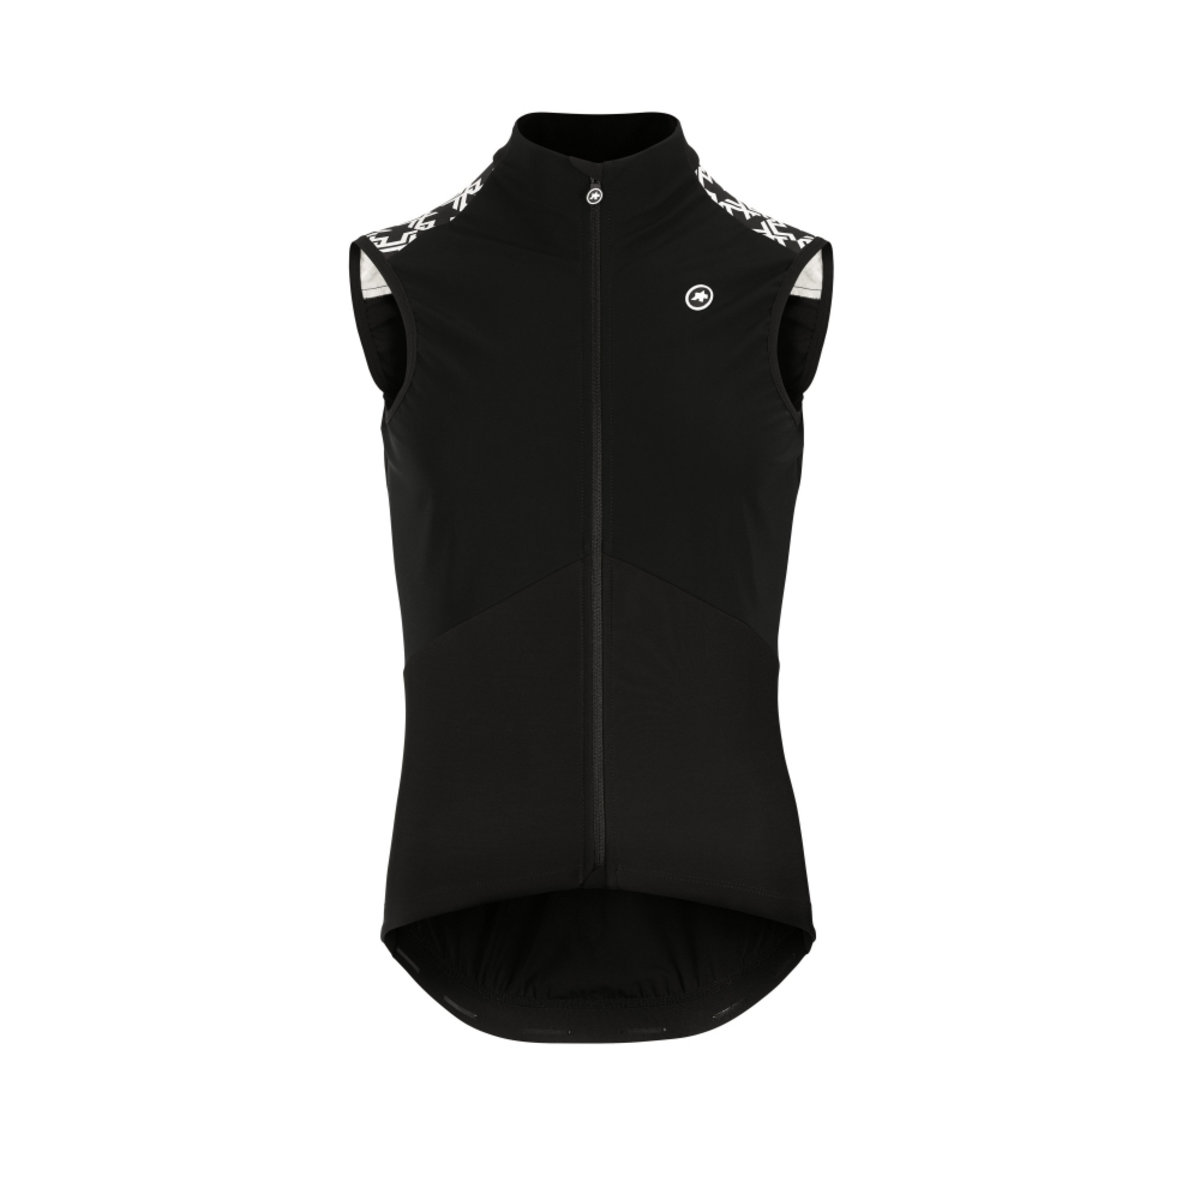 Жилетка ASSOS Mille GT Spring Fall Airblock Vest Black Series, мужская, черная с белым, S